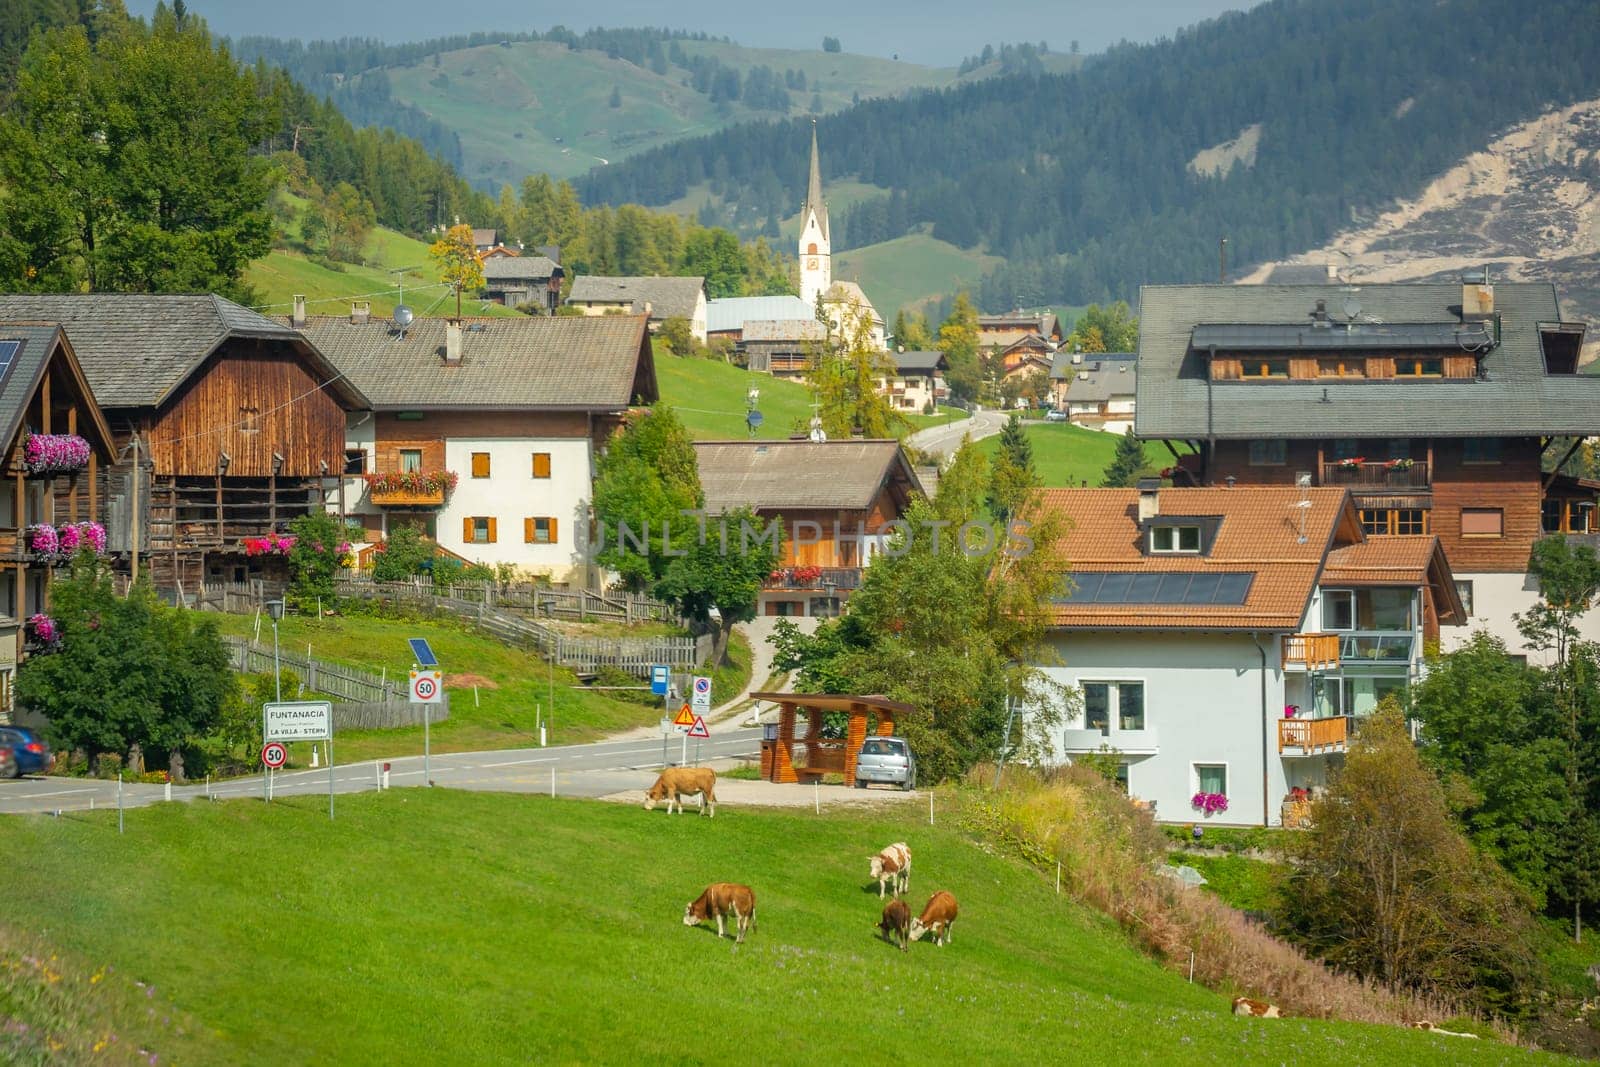 Idyllic Alpine village in Val di Funes, South Tyrol trentino Alto Adige, Italy